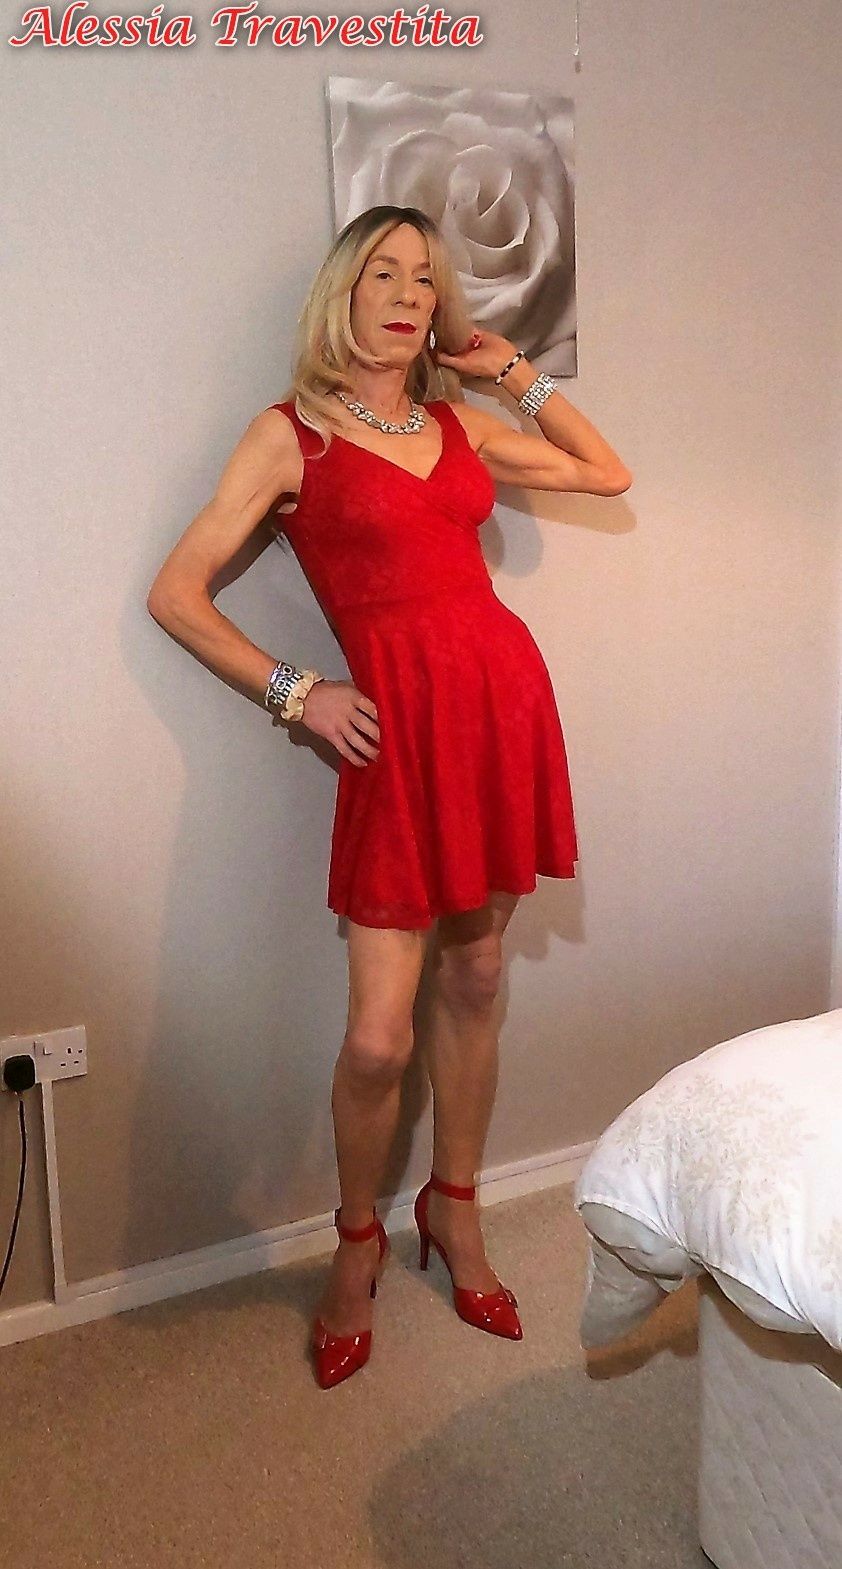 65 Alessia Travestita in Flirty Red Dress #25